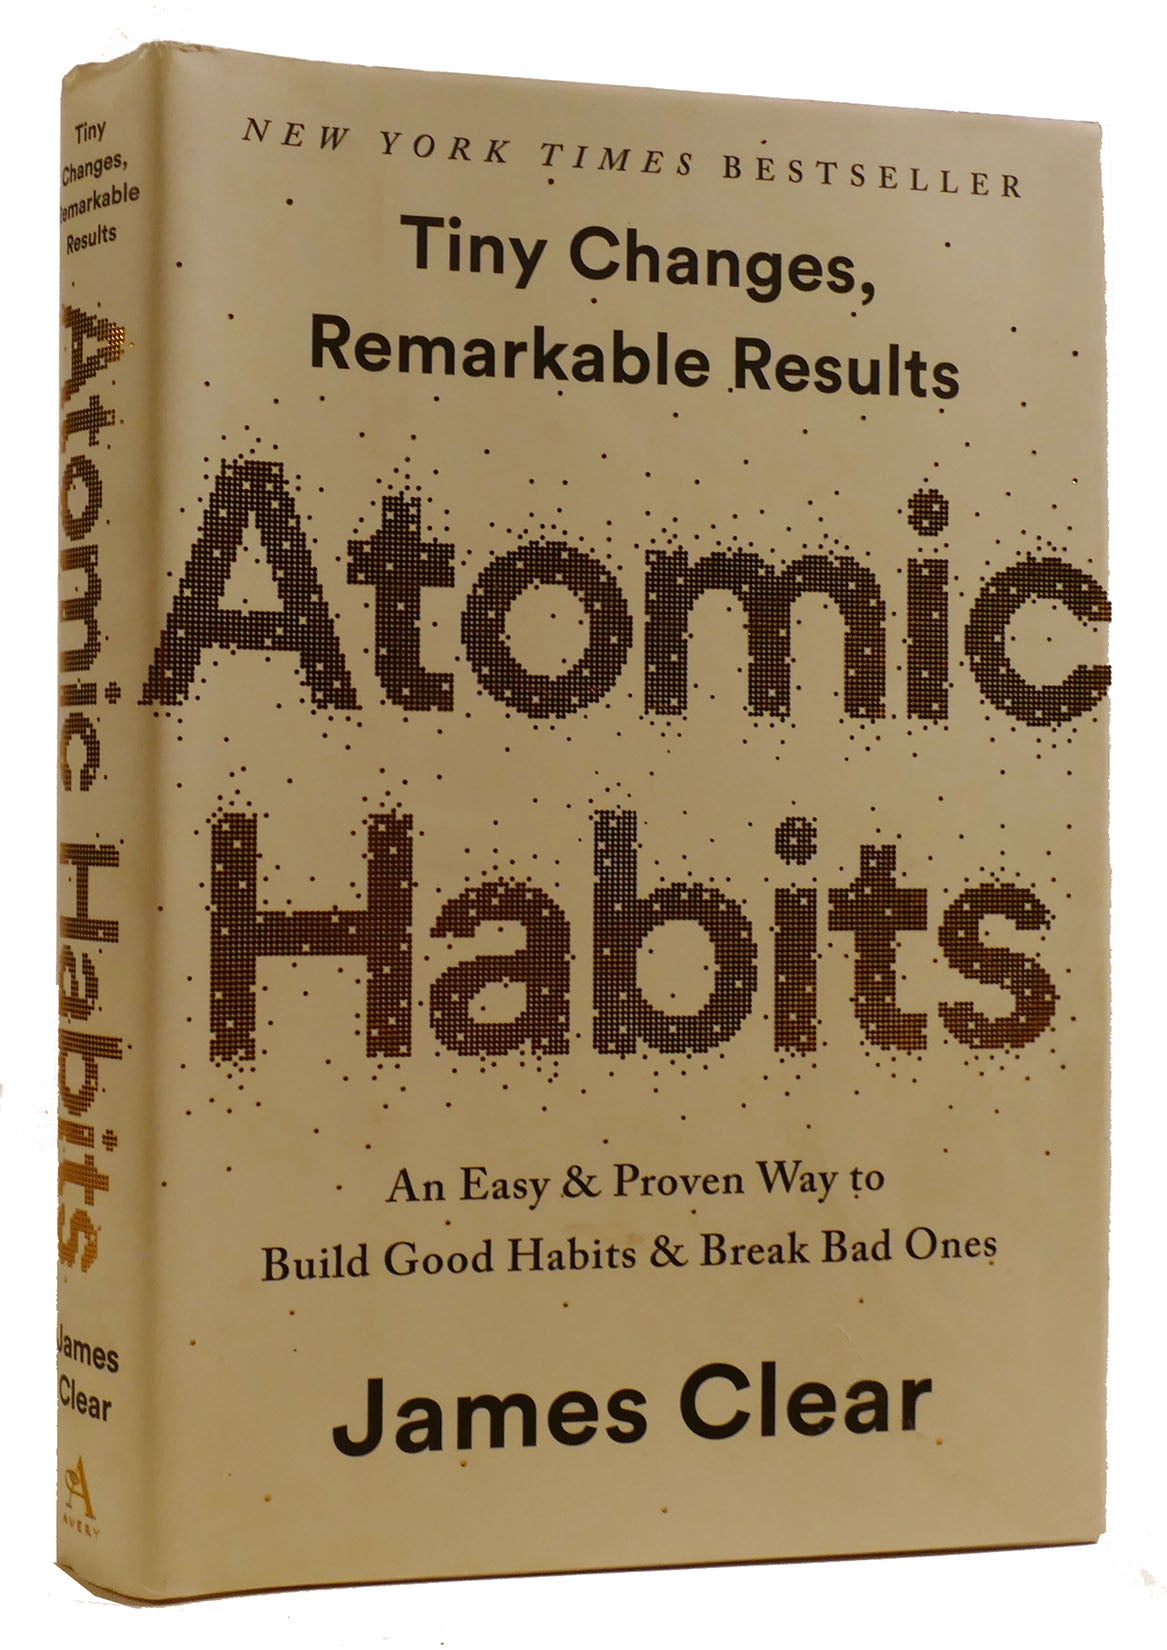 Rhythms, Week 1: Atomic Habits by James Clear